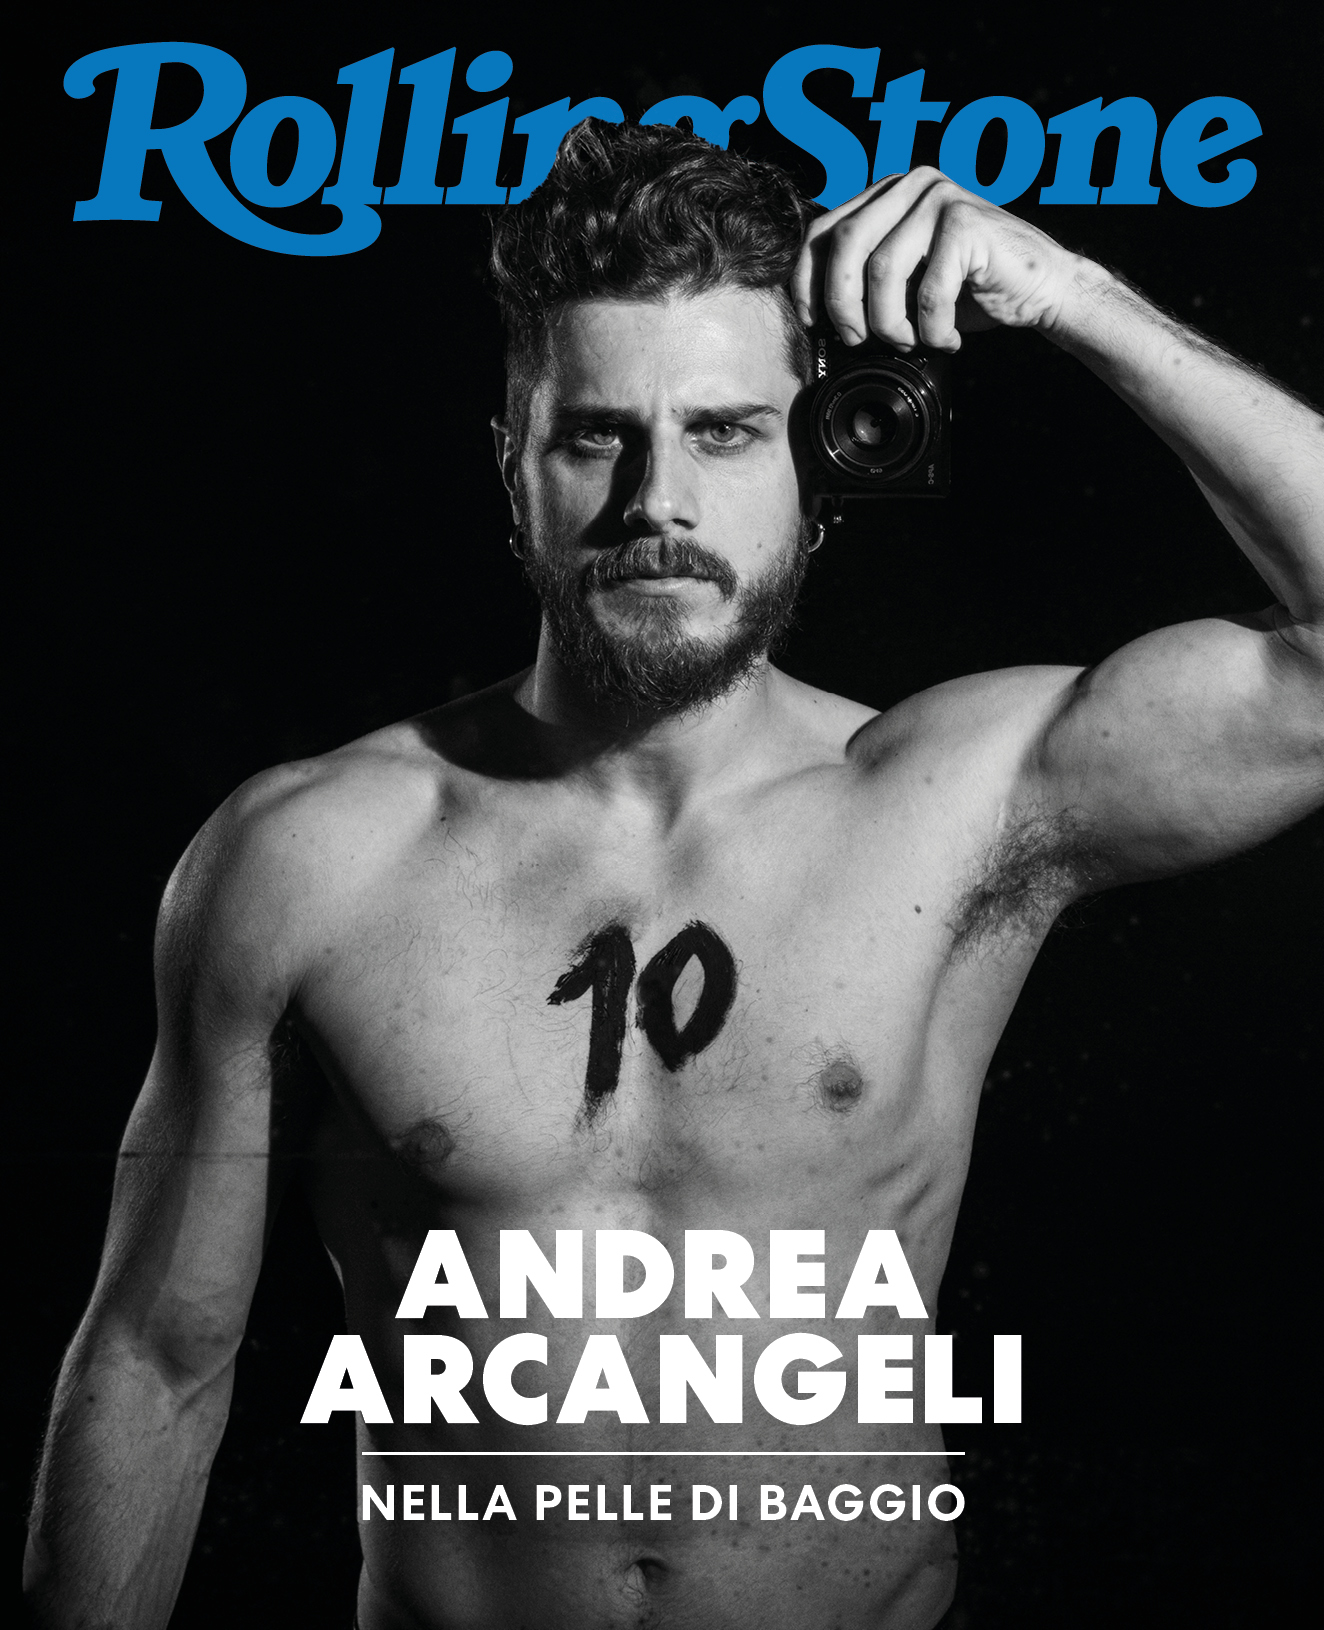 Andrea Arcangeli cover rolling stone